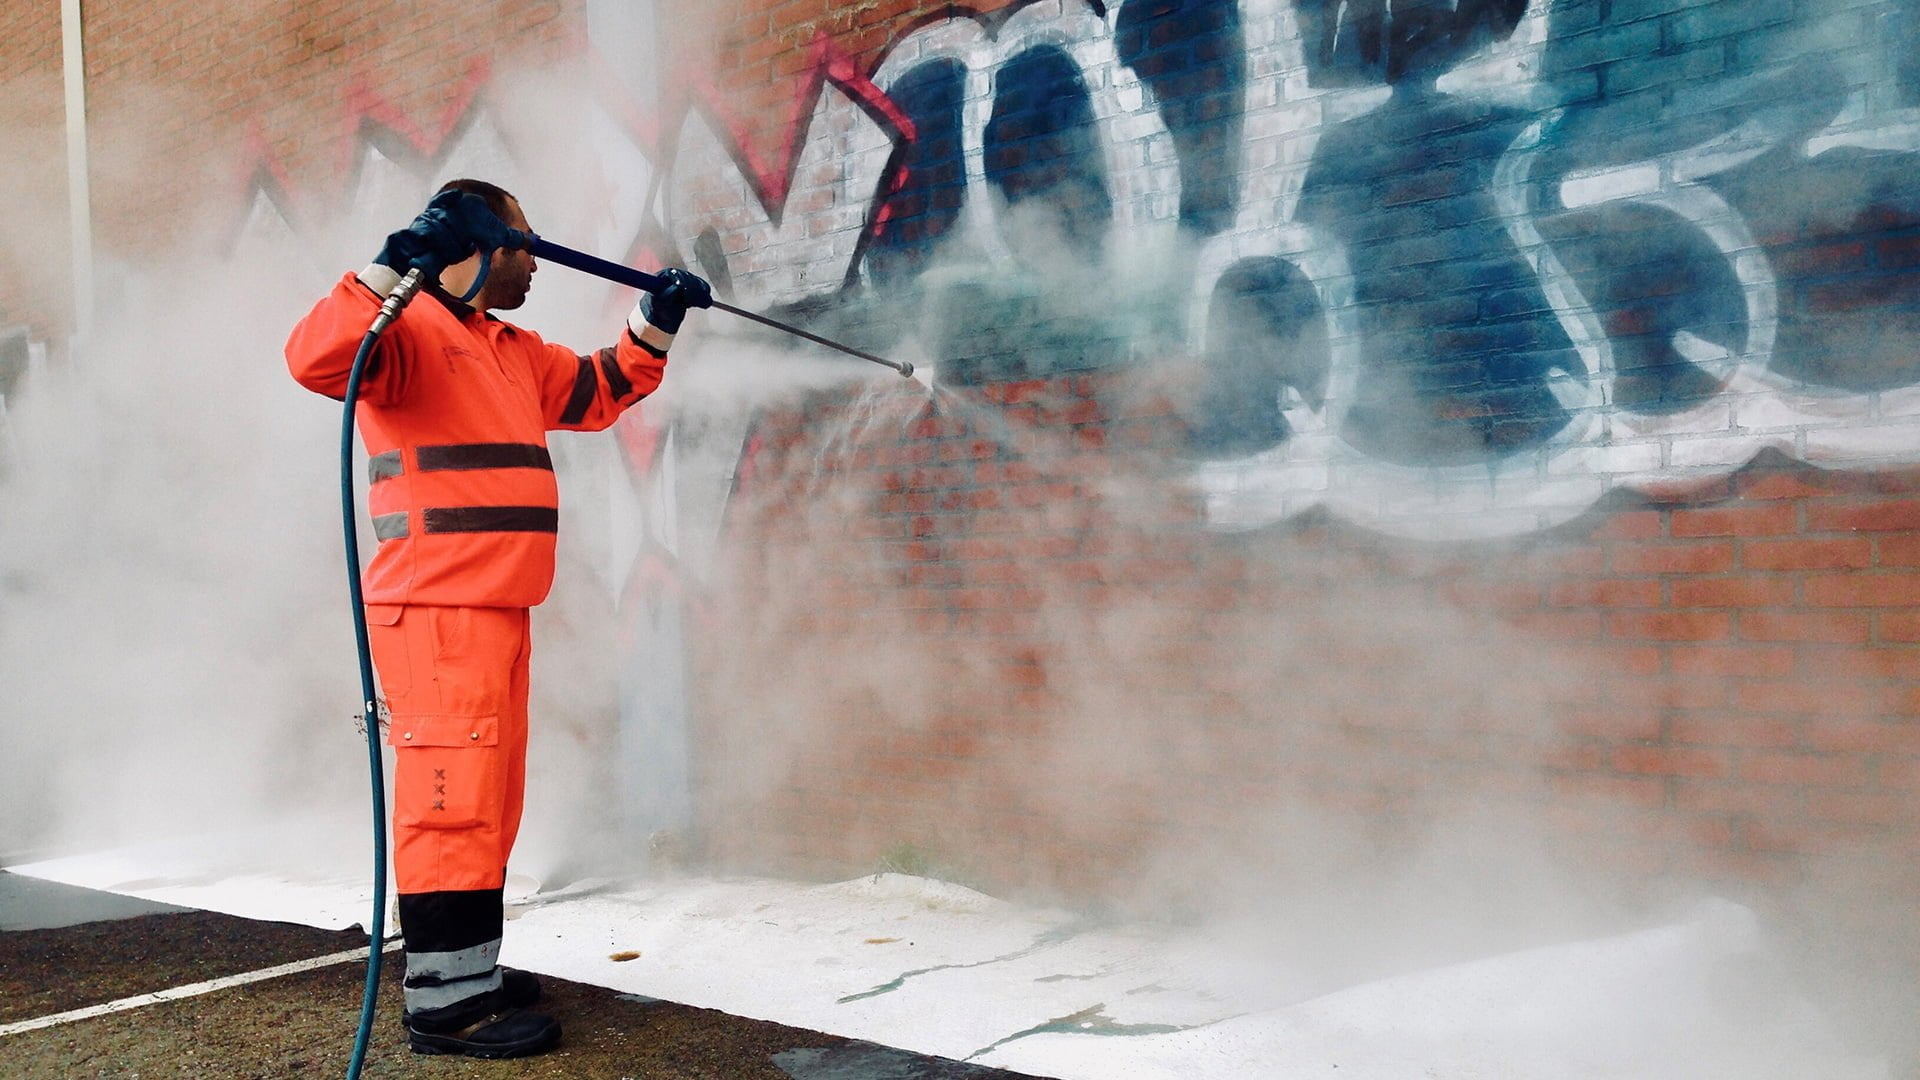 Read more about the article Grafitti Removal service in Godstone